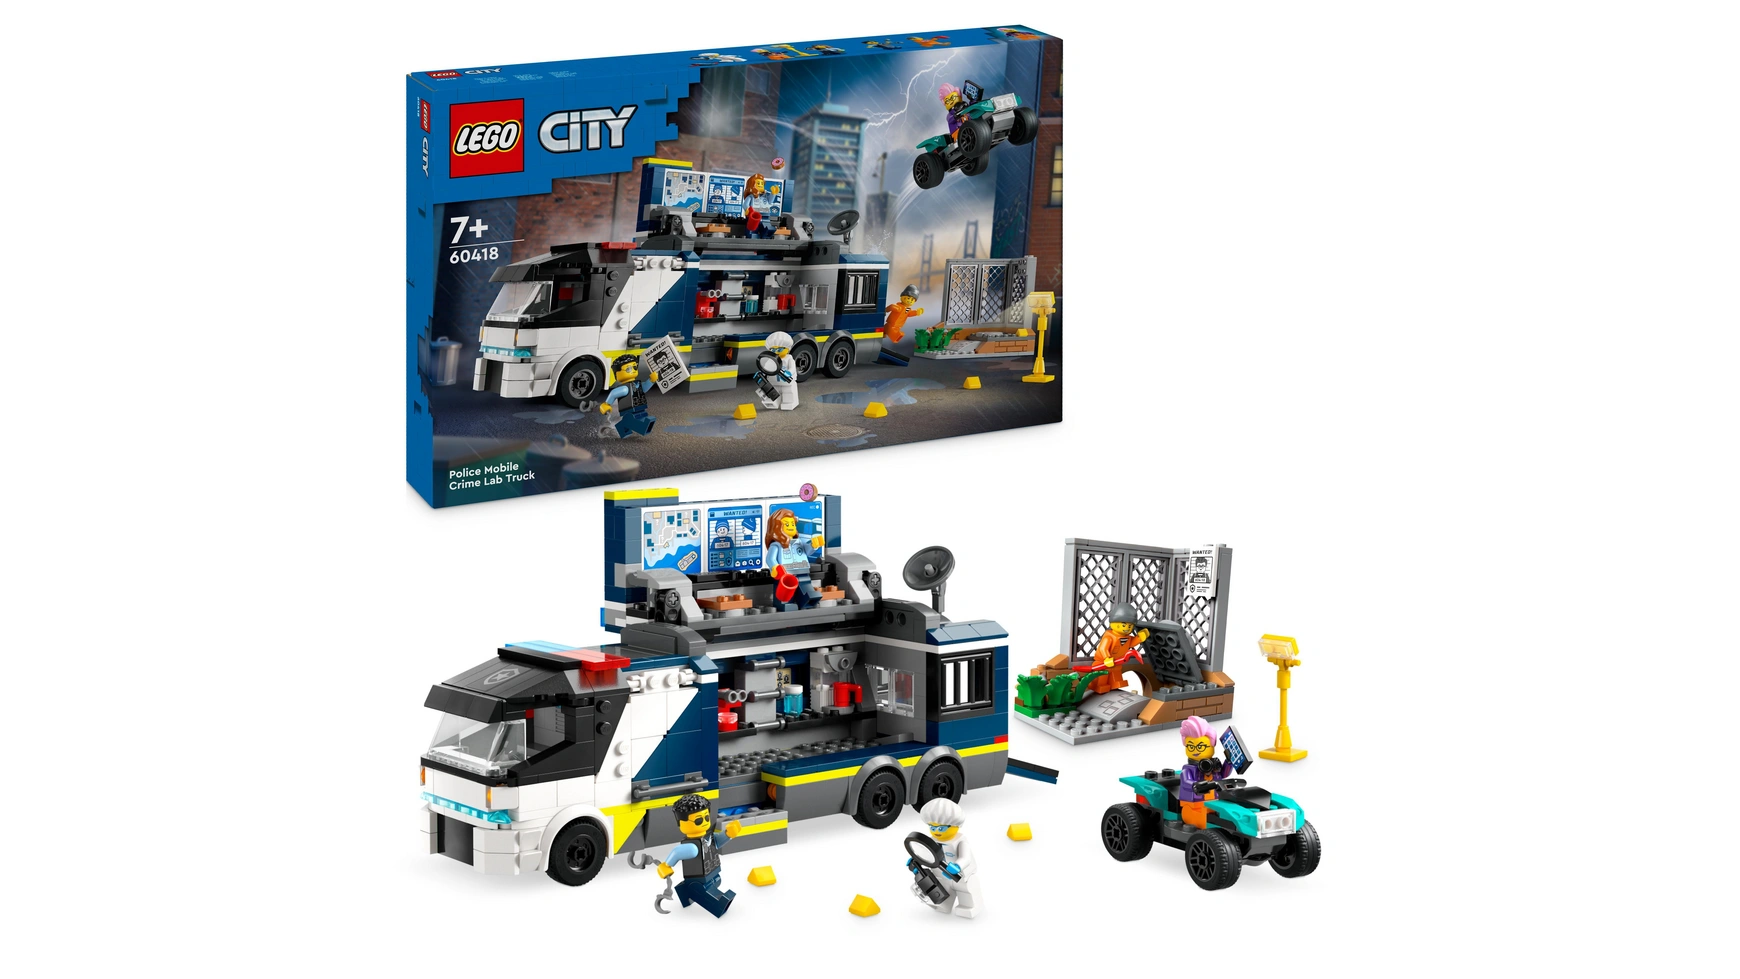 Lego City Полицейский грузовик с лабораторией, полицейский набор с игрушечным грузовиком цена и фото